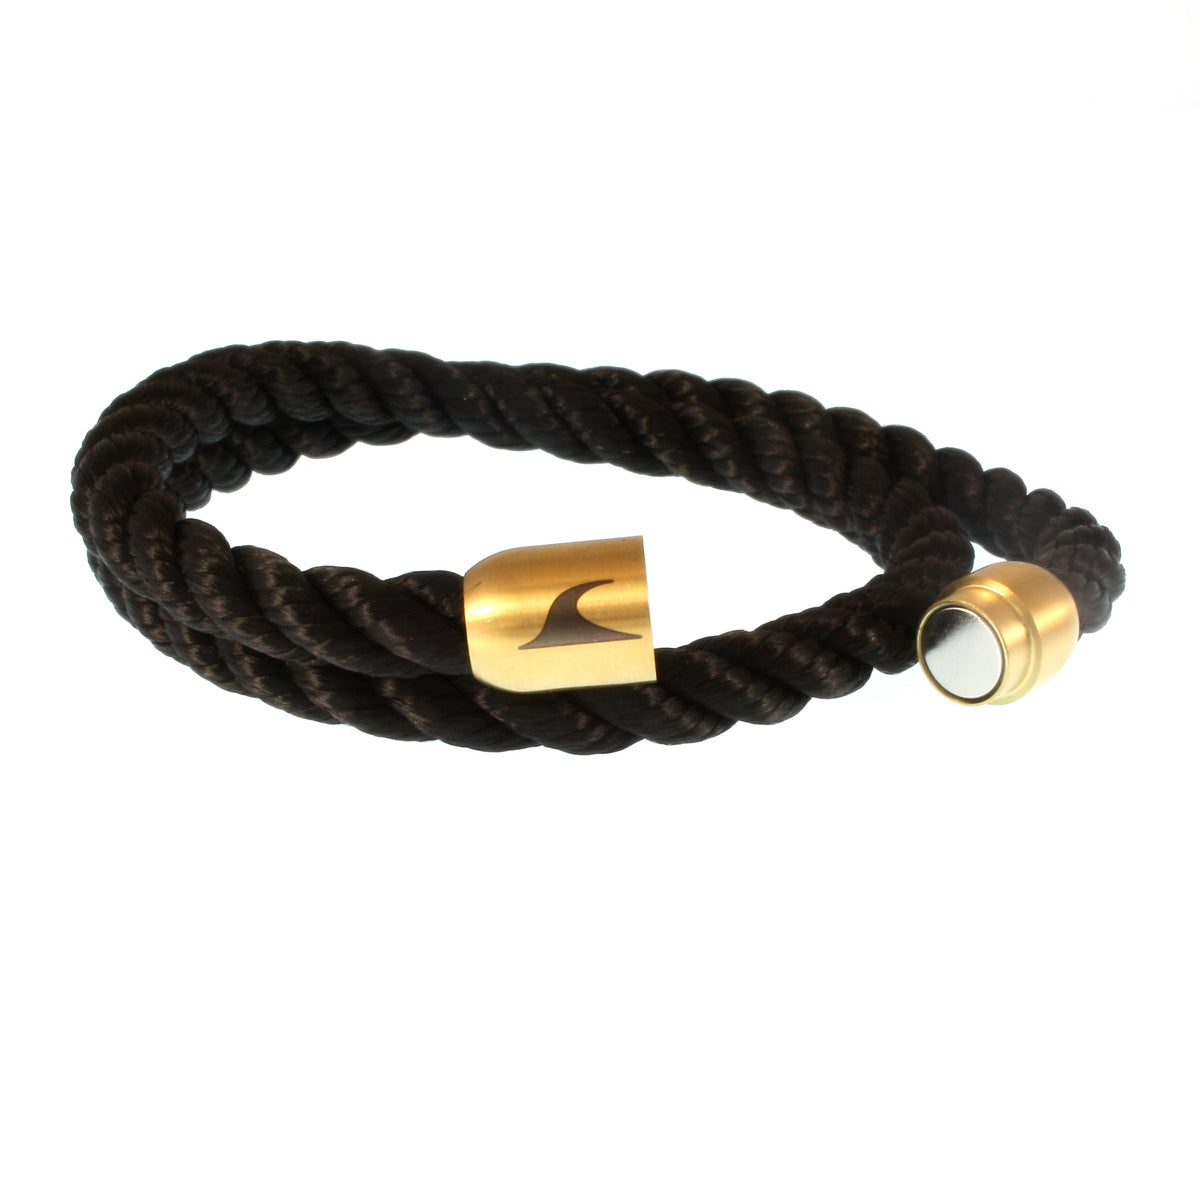 Herren-Segeltau-Armband-hawaii-schwarz-gold-Edelstahlverschluss-offen-wavepirate-shop-k